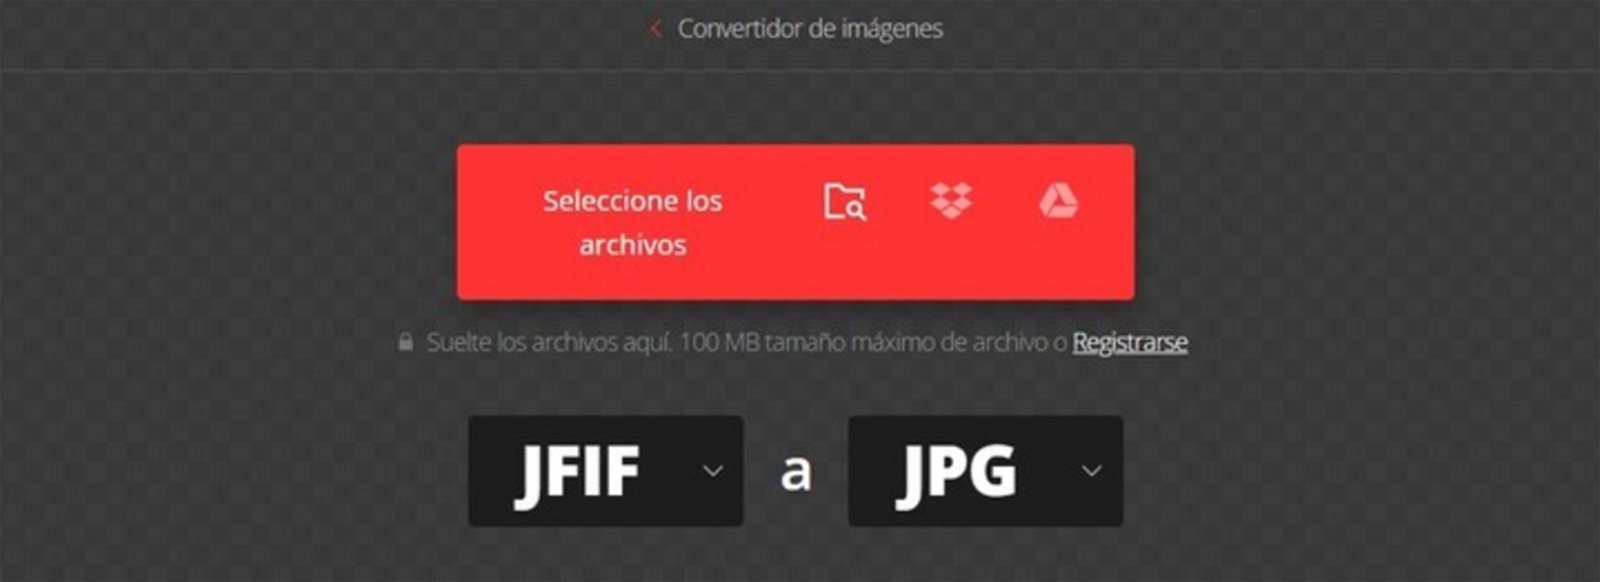 Convert jfif to jpg with Convertio